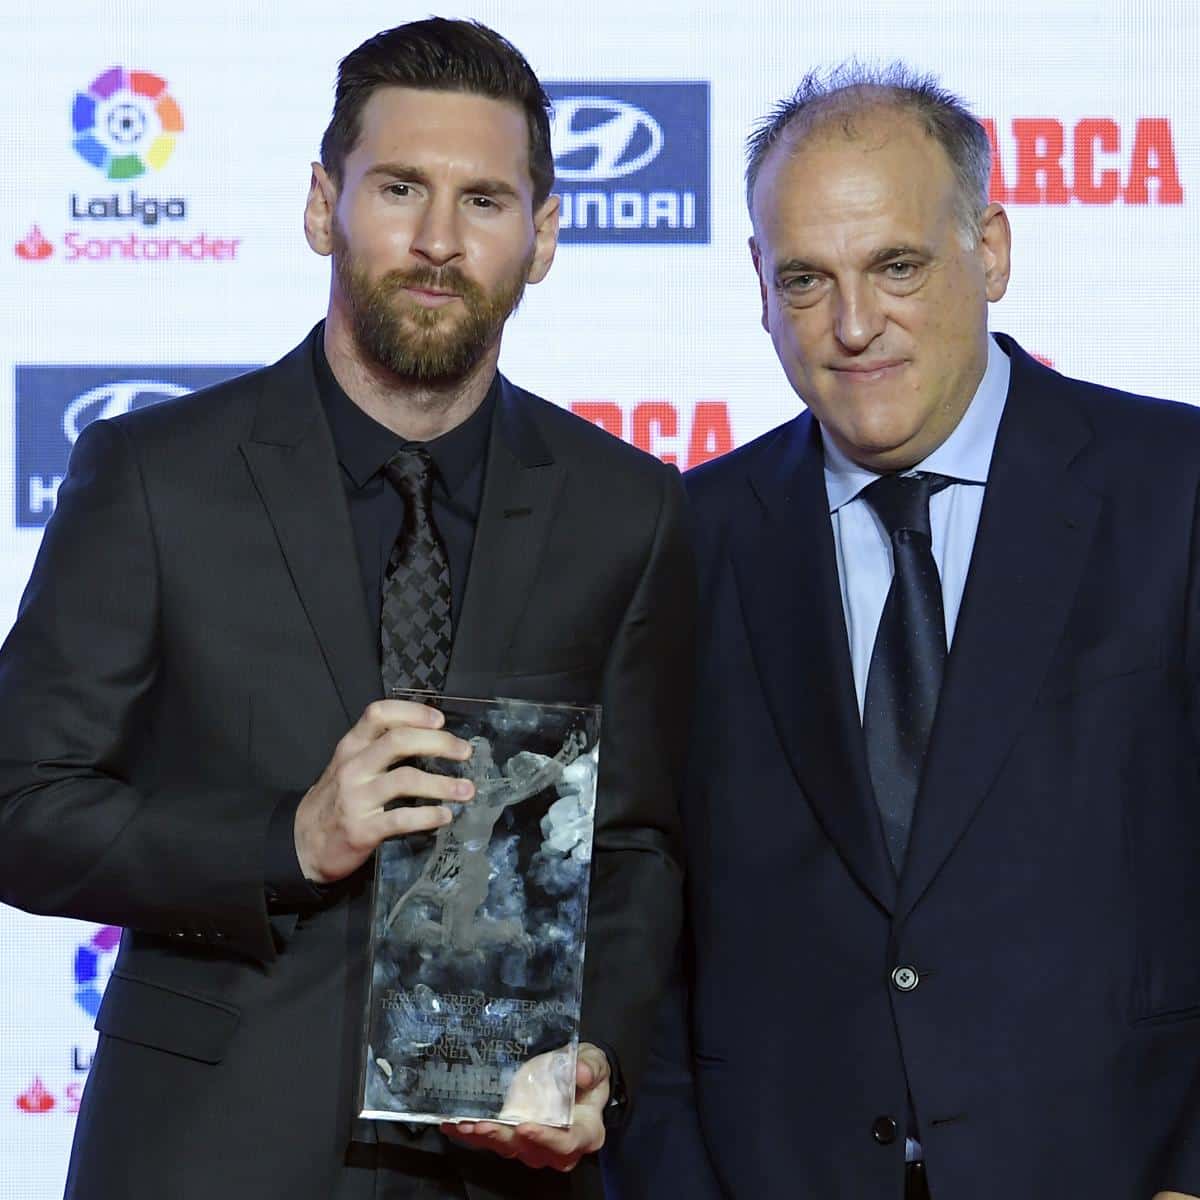 La Liga chief warns Barcelona over Messi registration next season